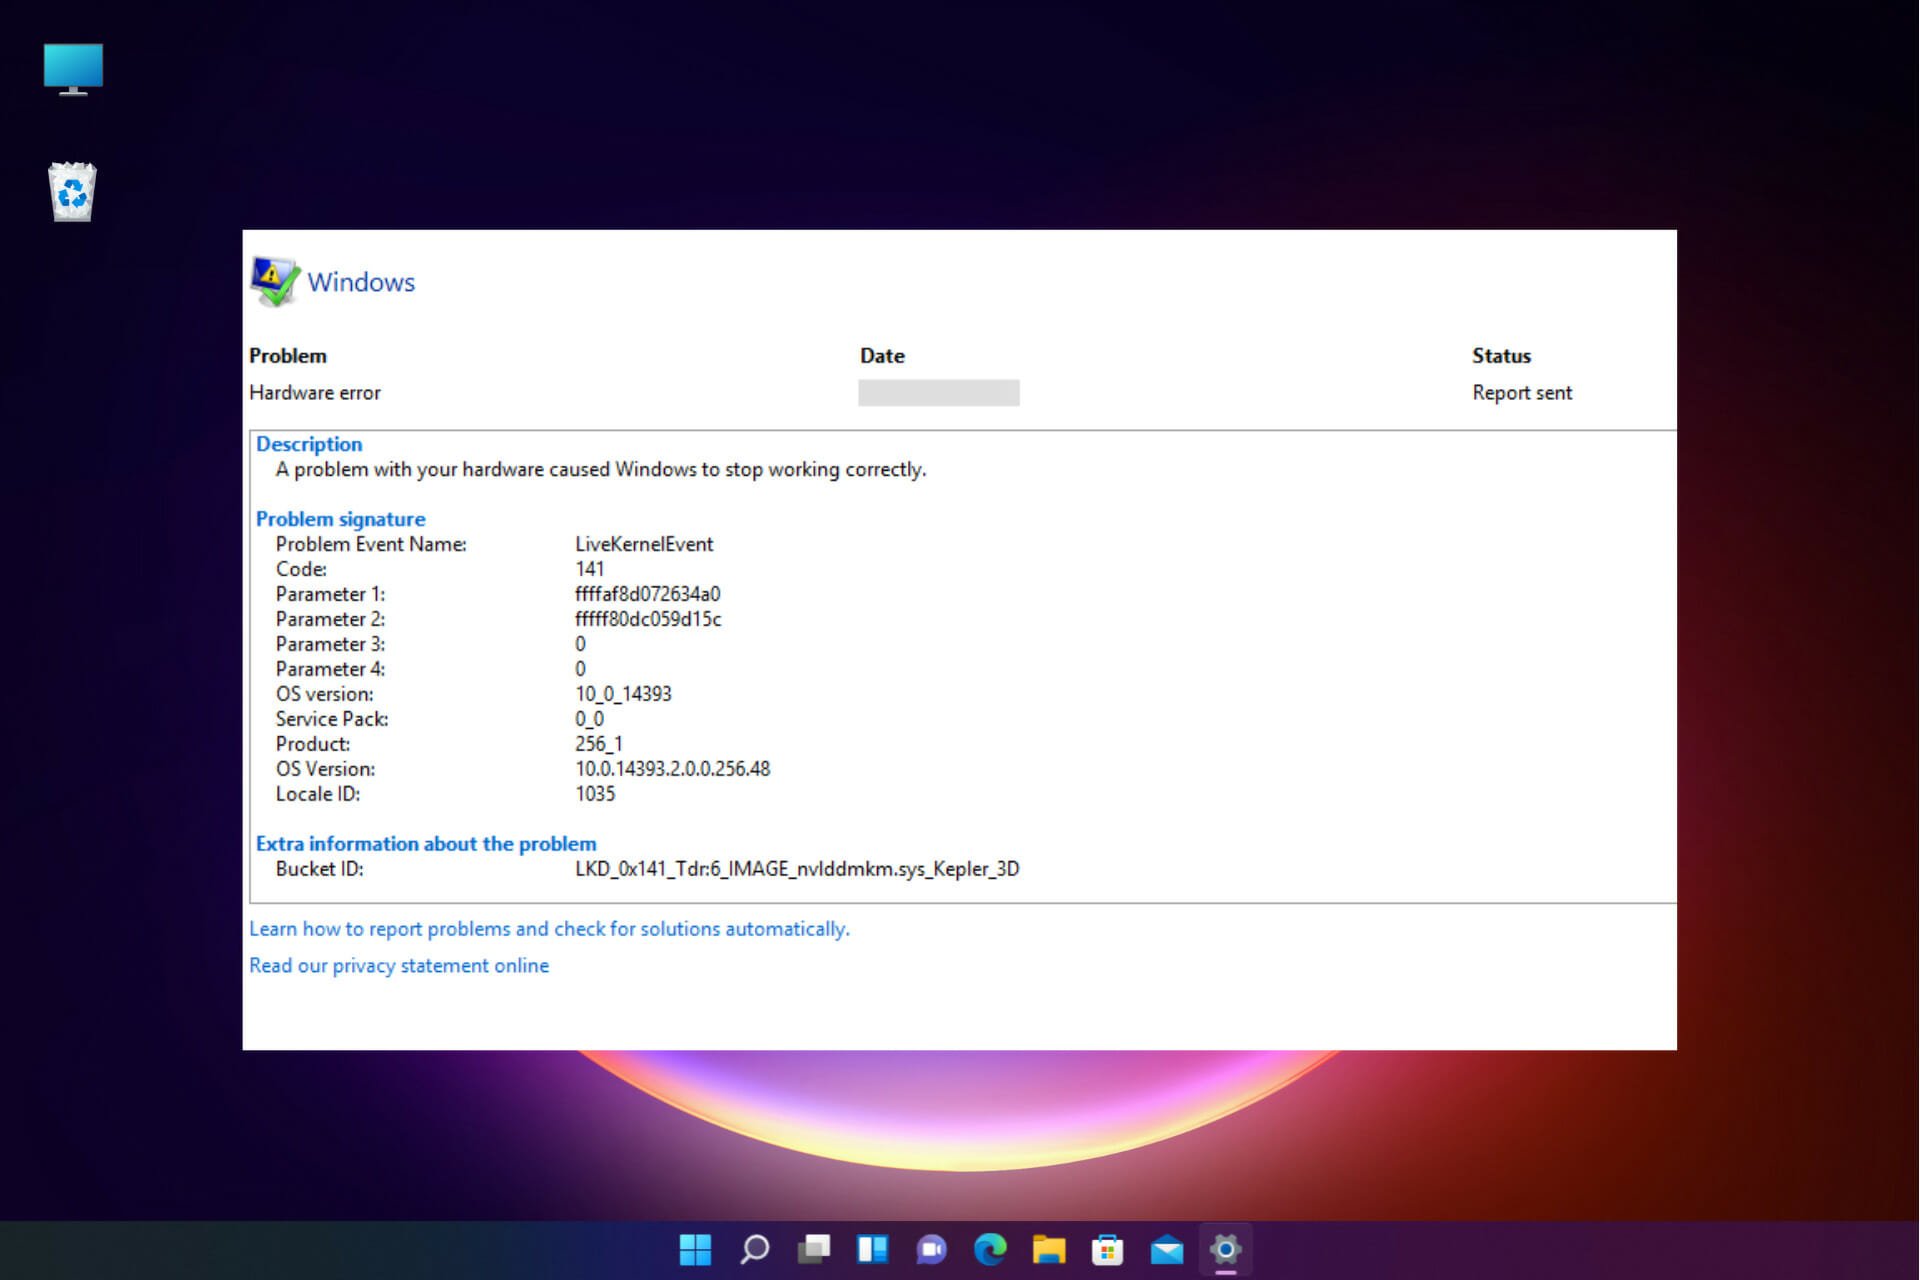 Fix Windows 10 Live kernel event 141